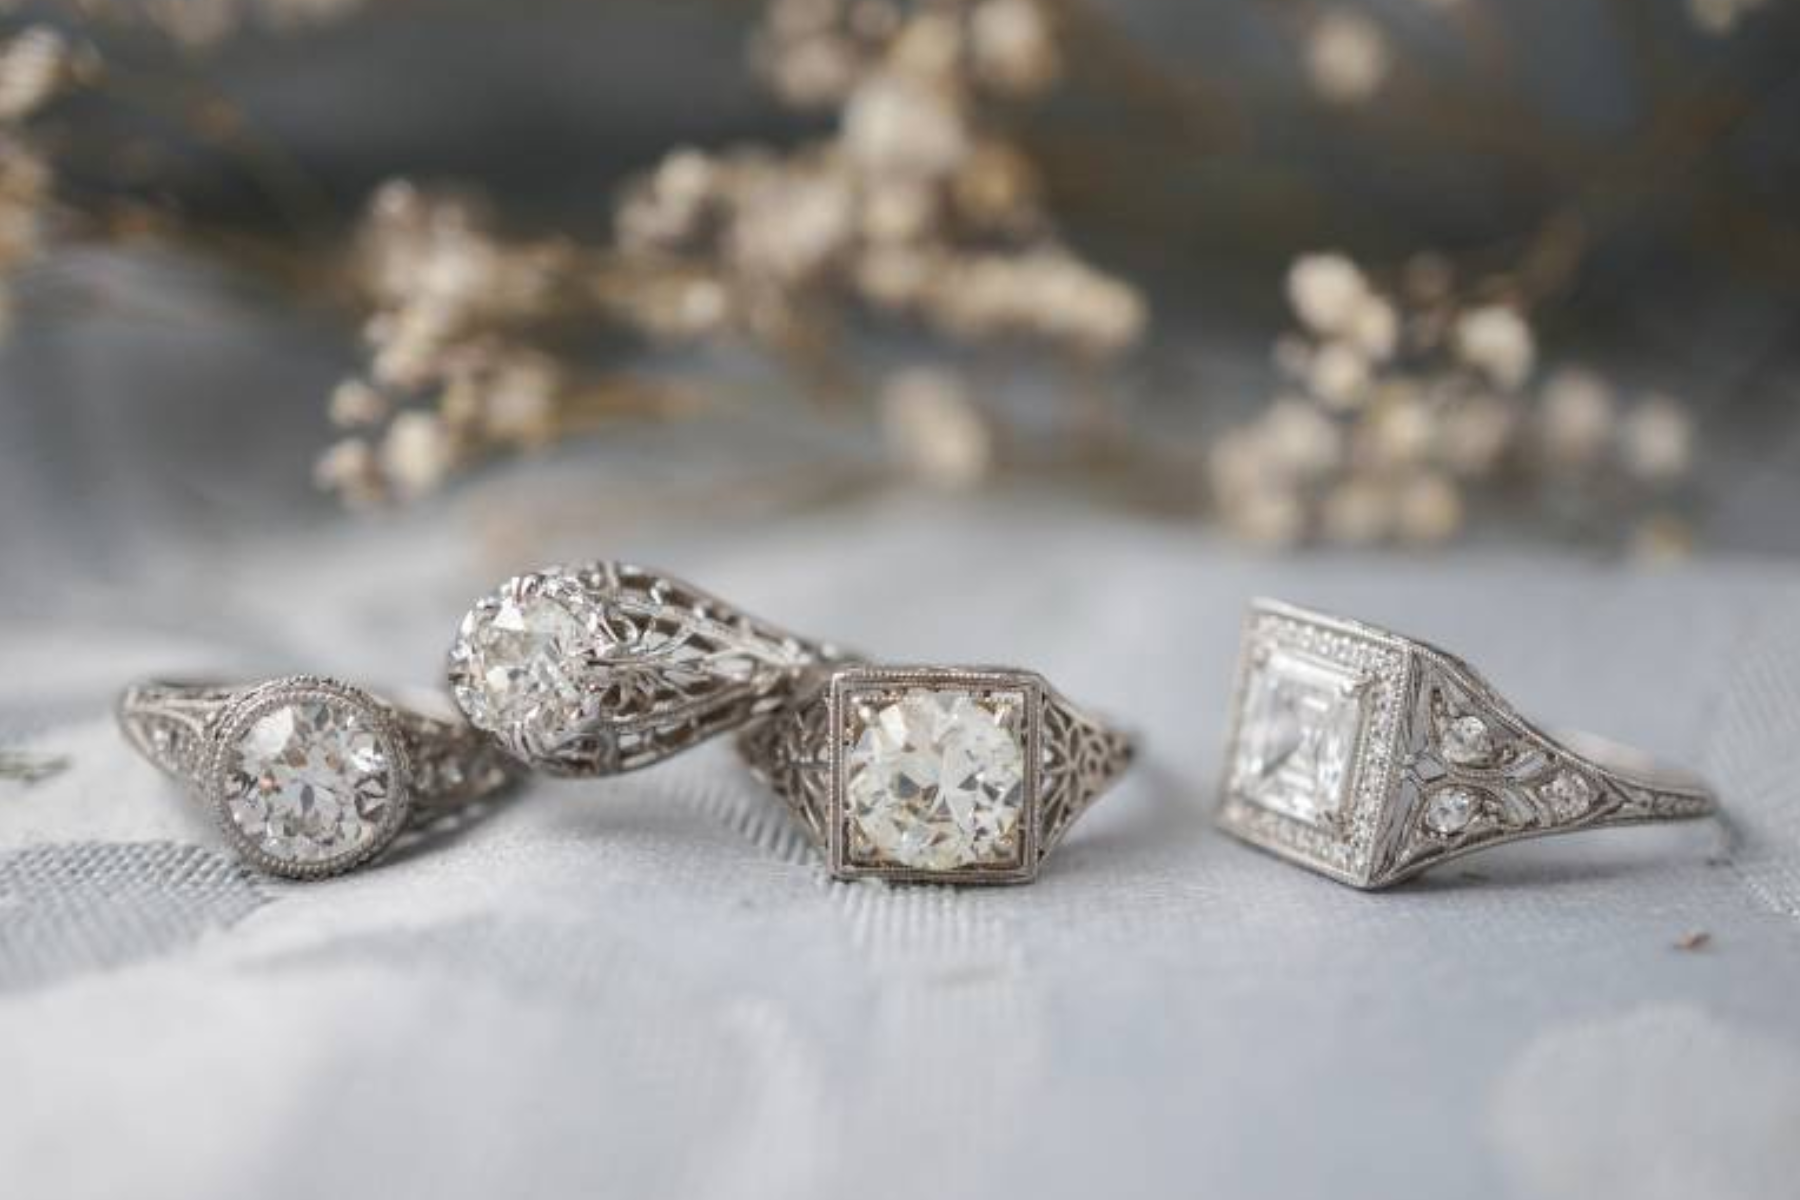 Four distinct varieties of engagement rings